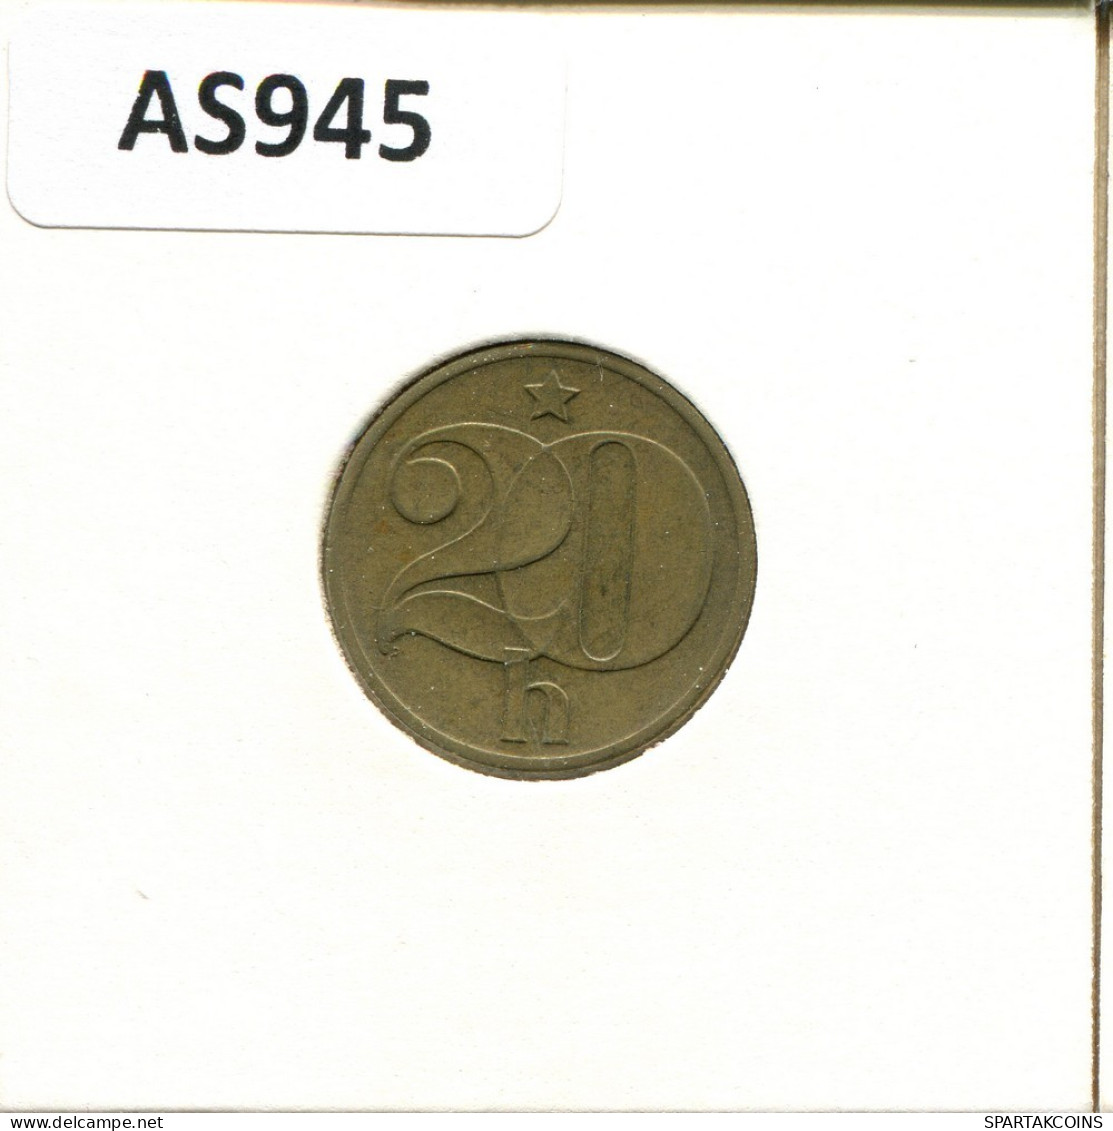 20 HALERU 1976 CZECHOSLOVAKIA Coin #AS945.U.A - Tsjechoslowakije